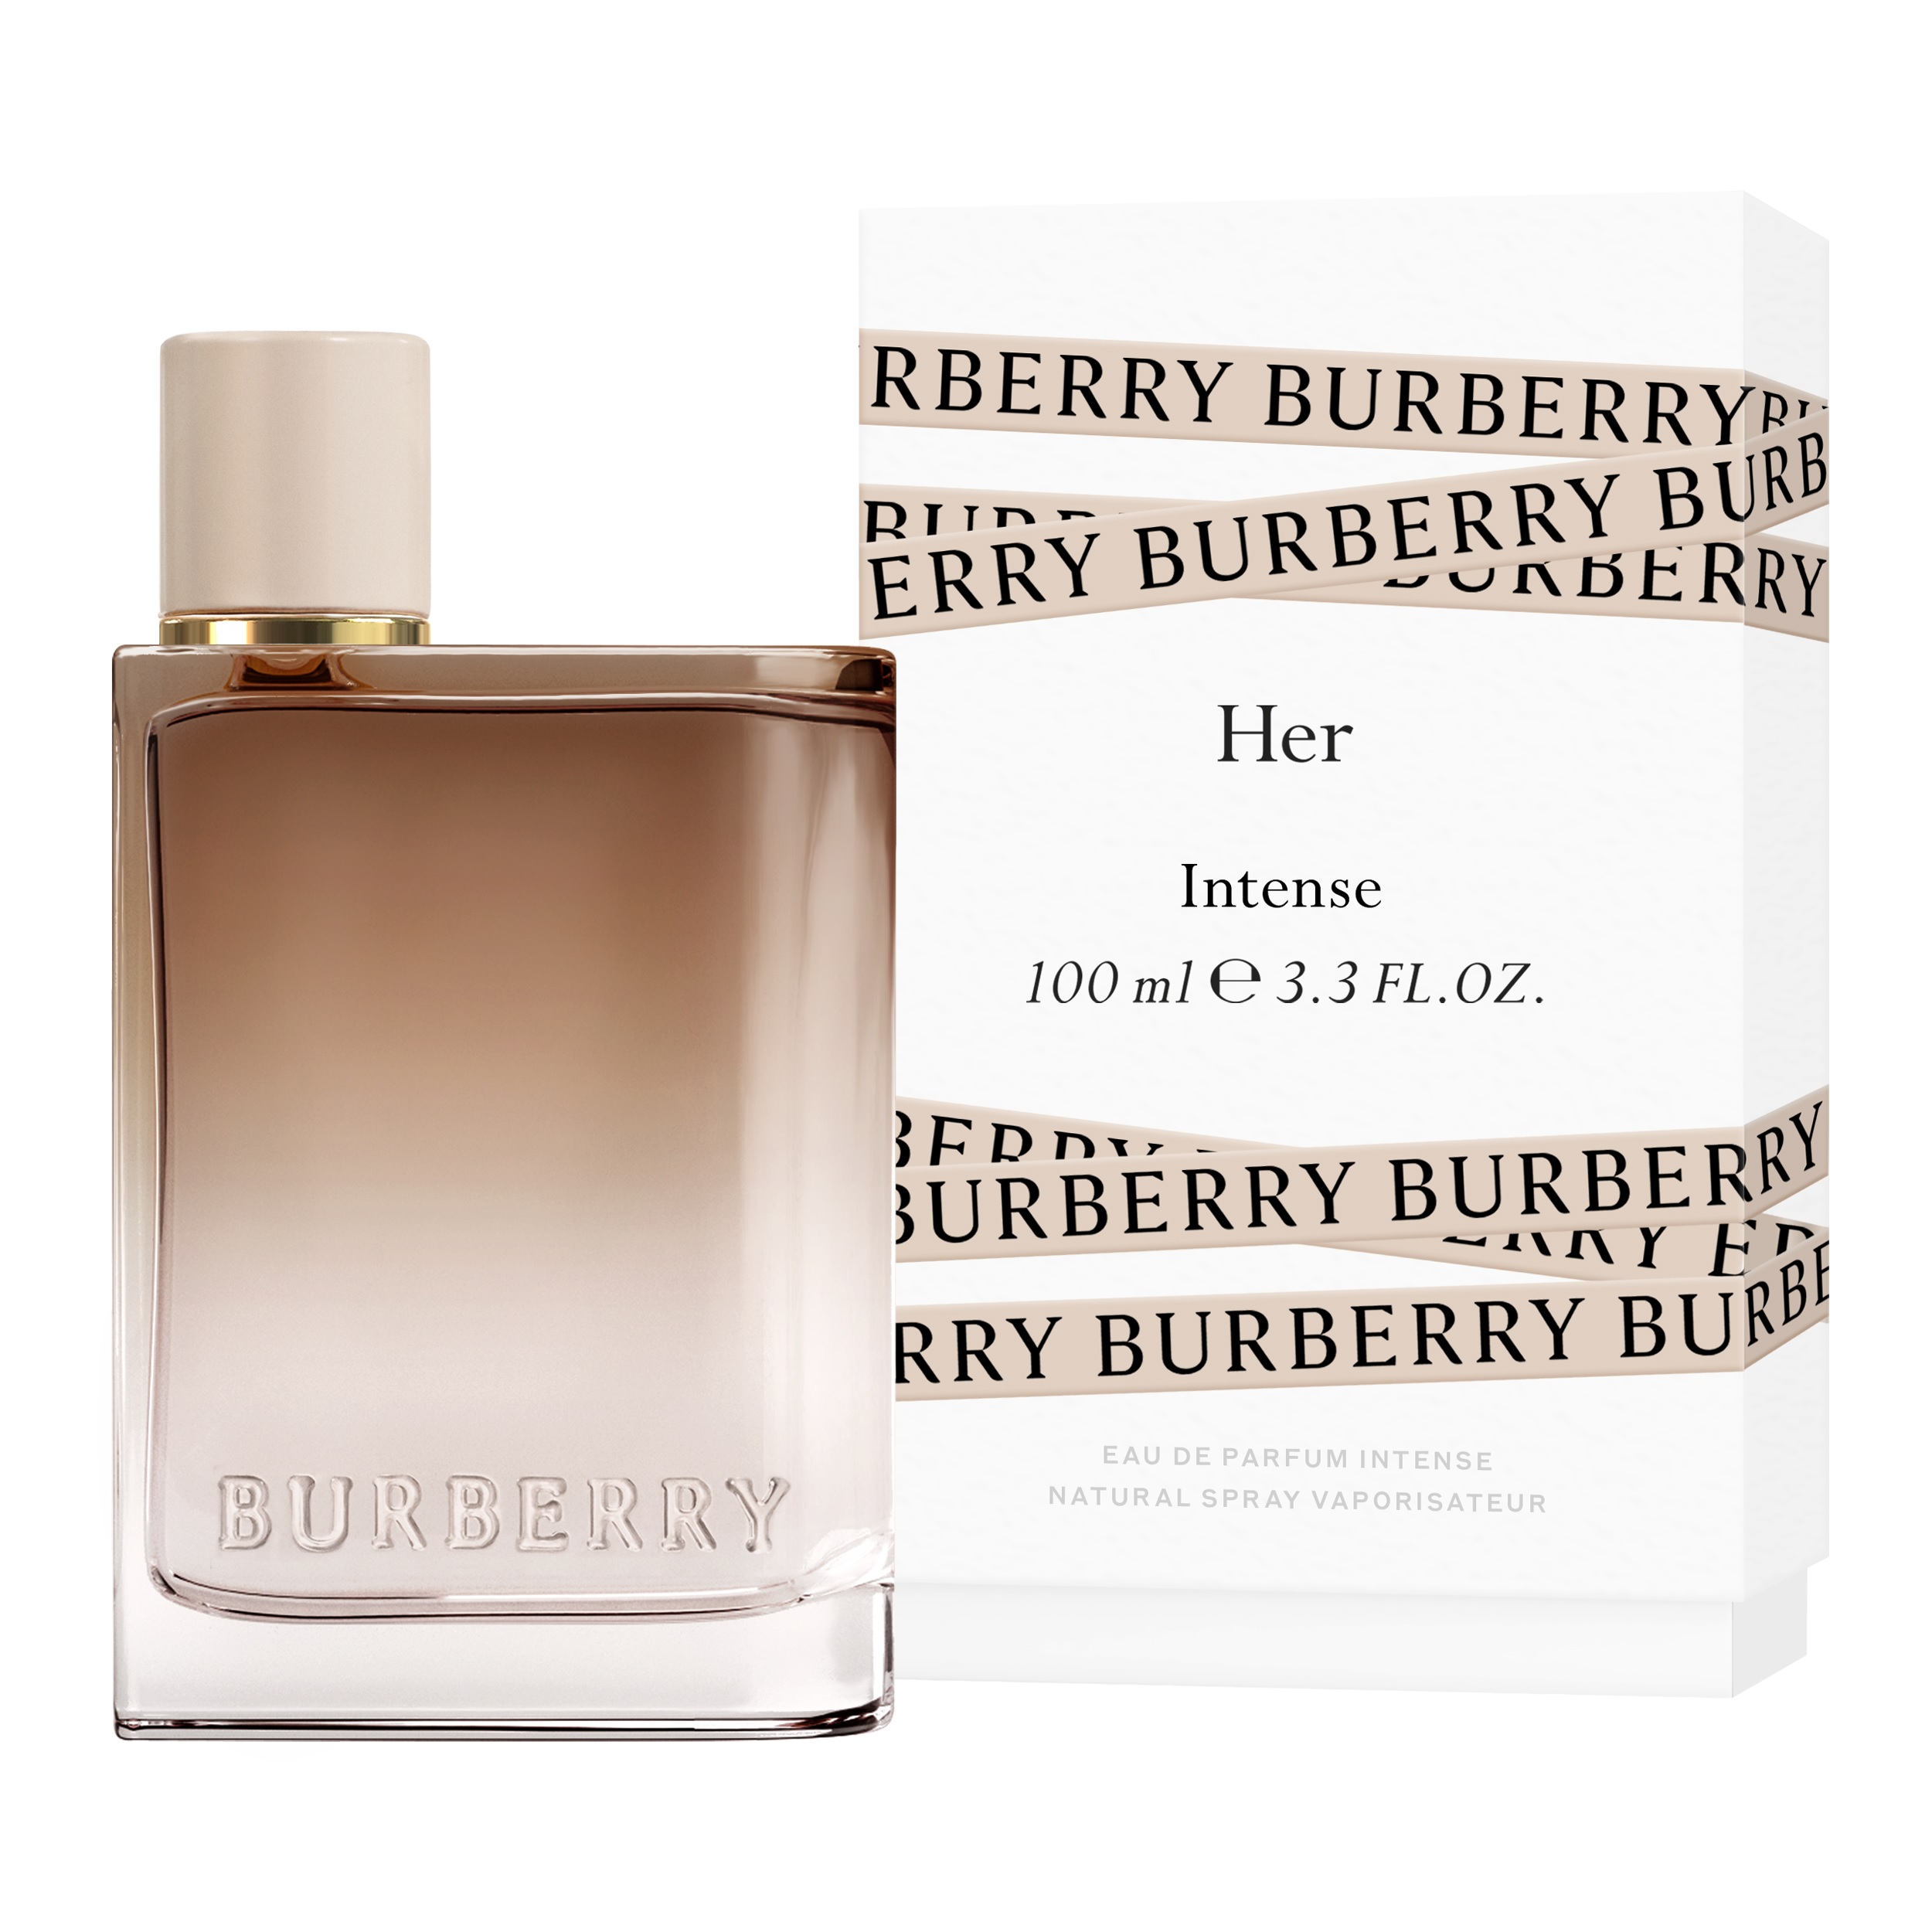 burberry her new perfume